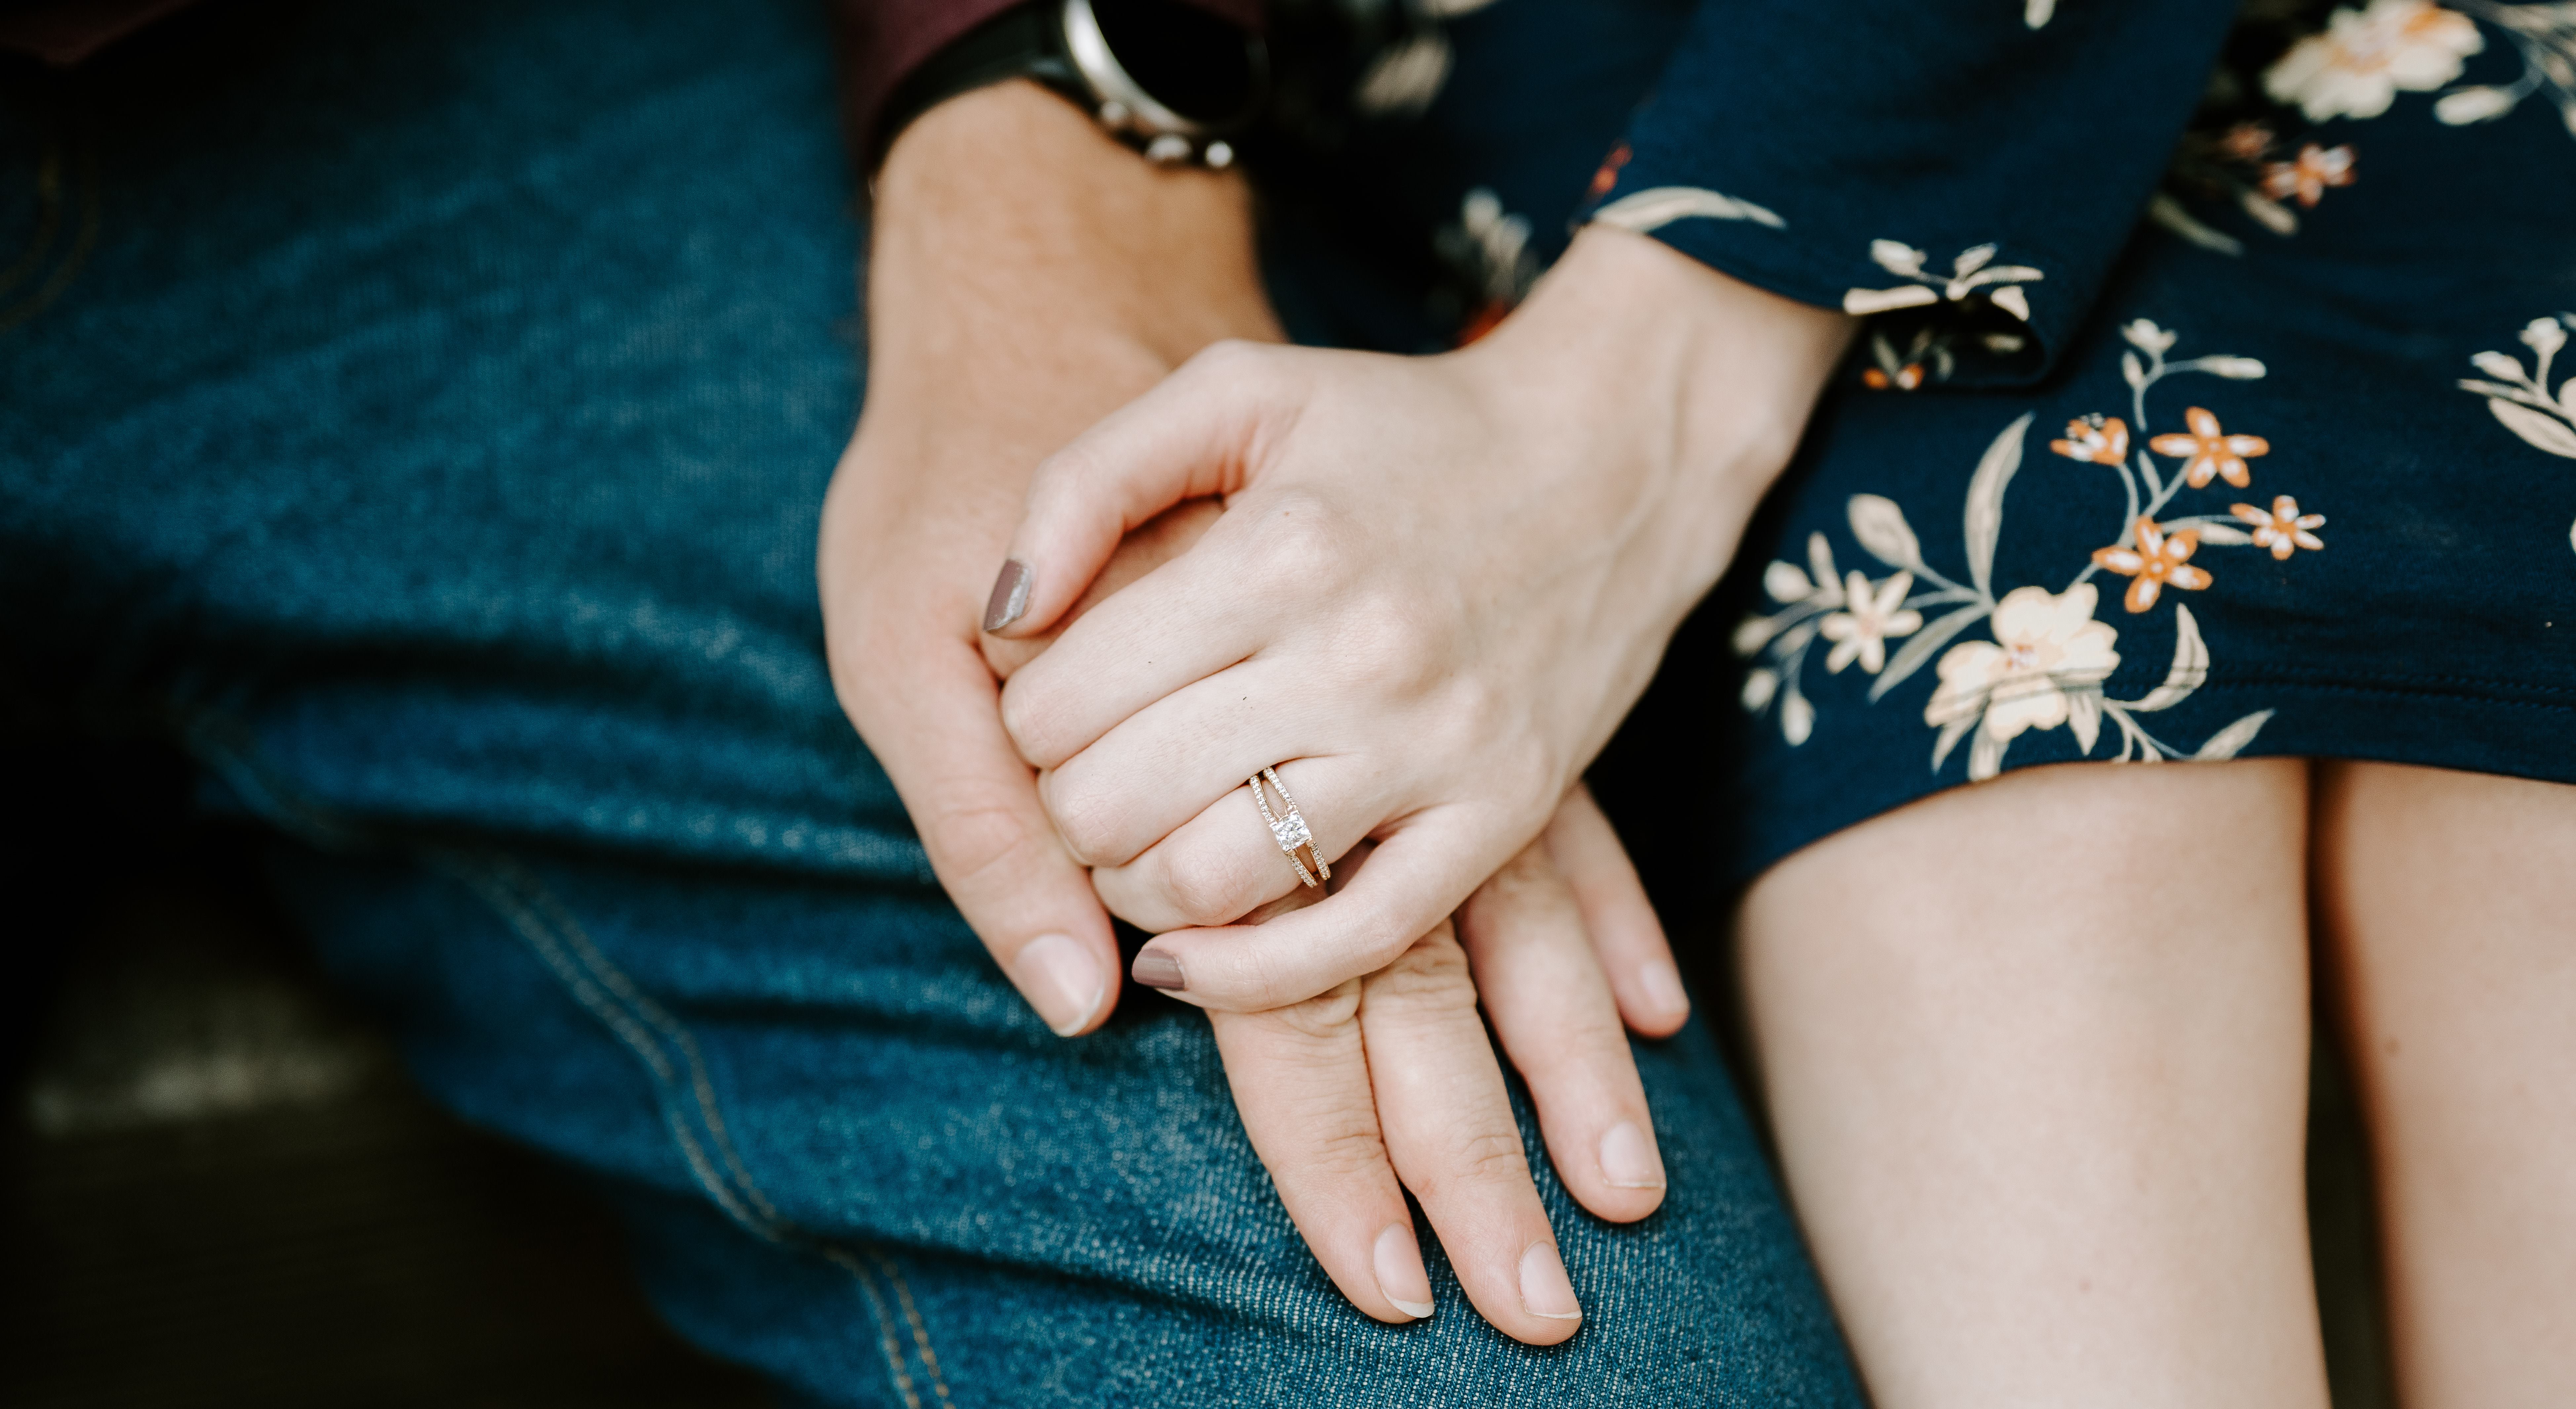 Matthew & Samantha holding hands, highlighting the engagement ring